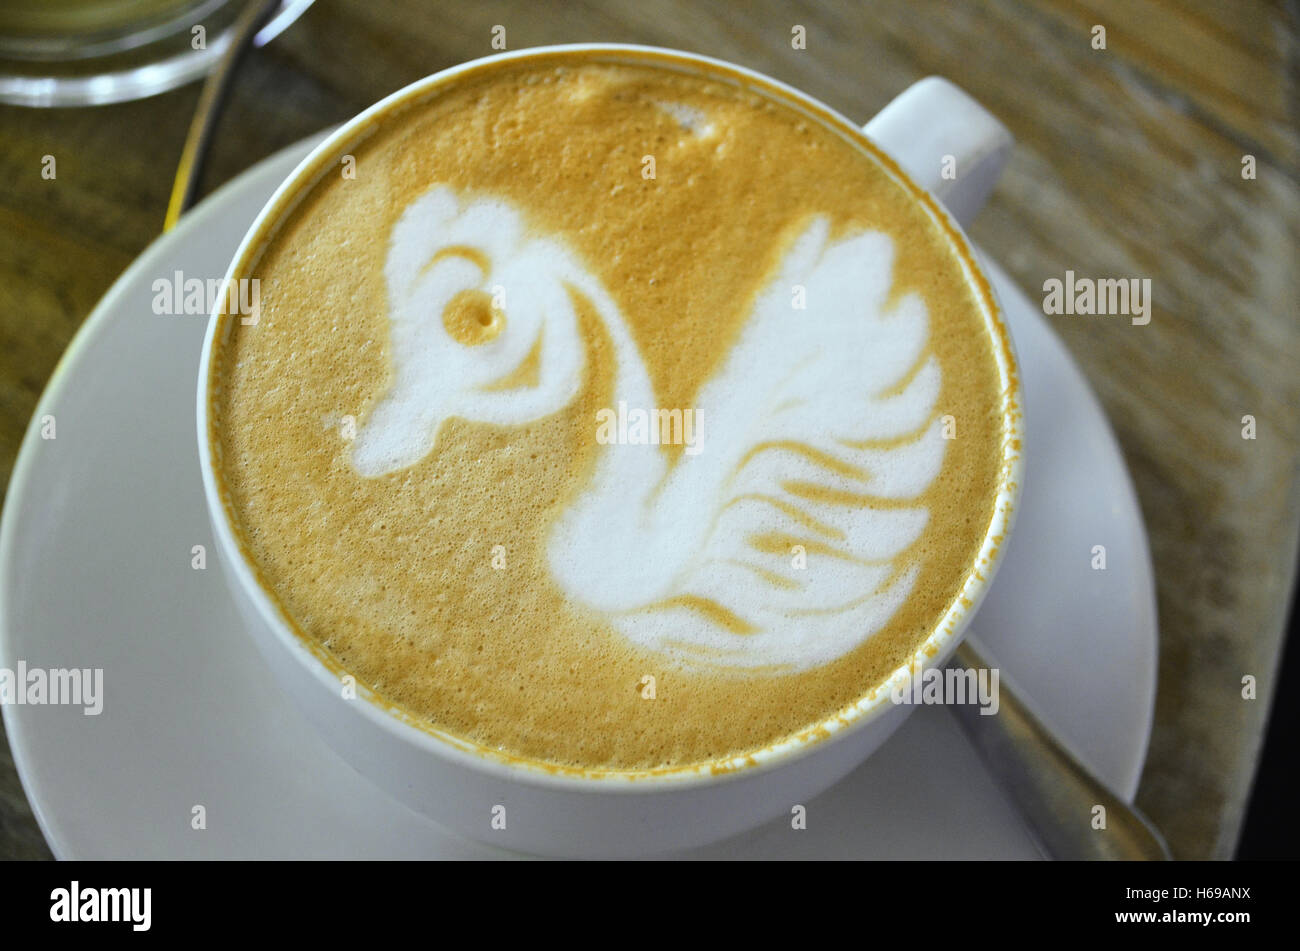 https://c8.alamy.com/compde/h69anx/ente-dekoration-auf-tasse-cappuccino-kaffee-h69anx.jpg